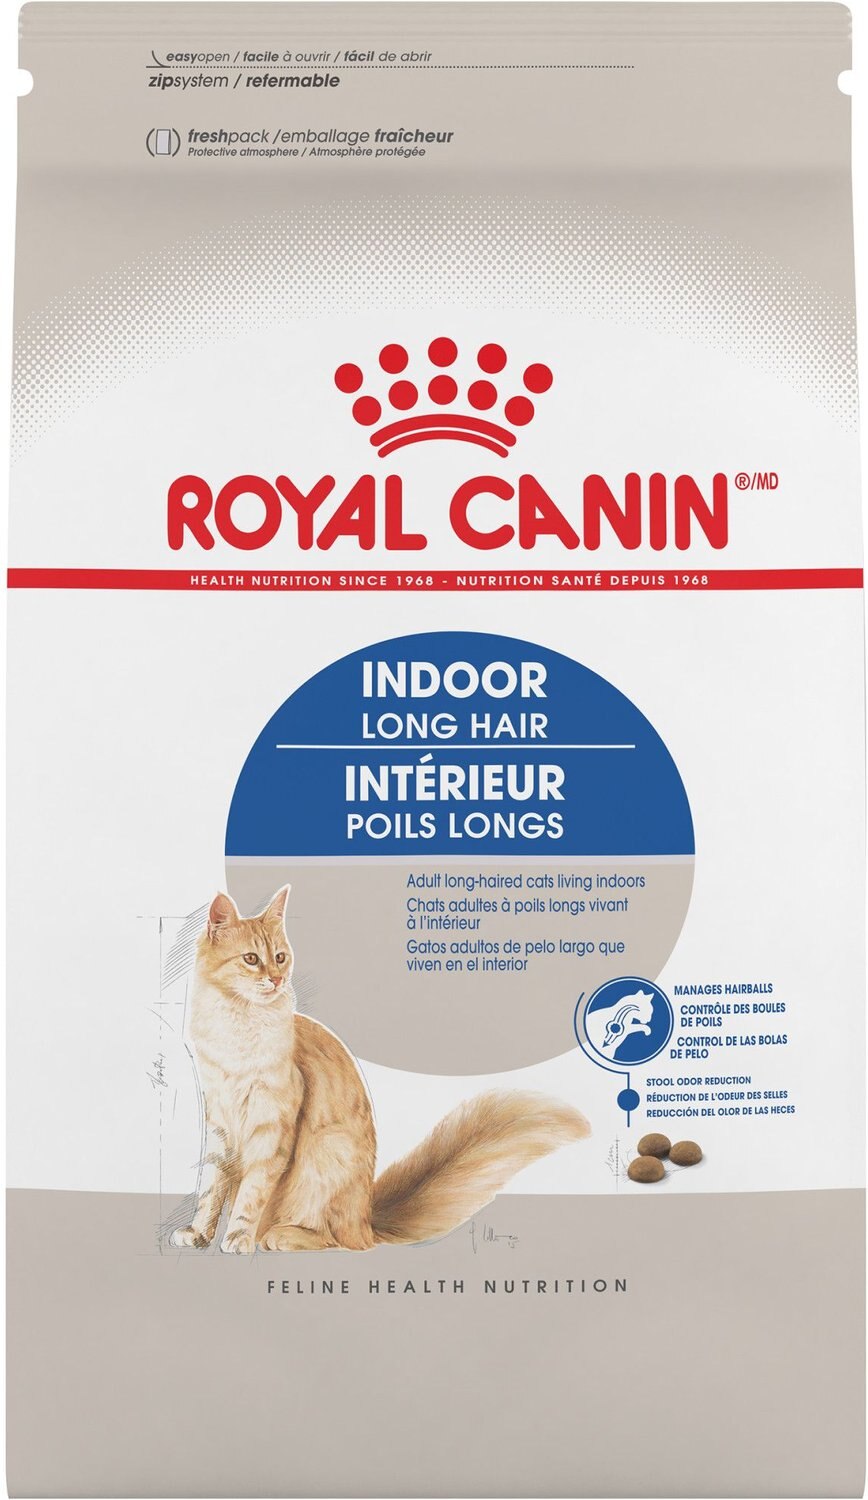 royal canin cat hairball control